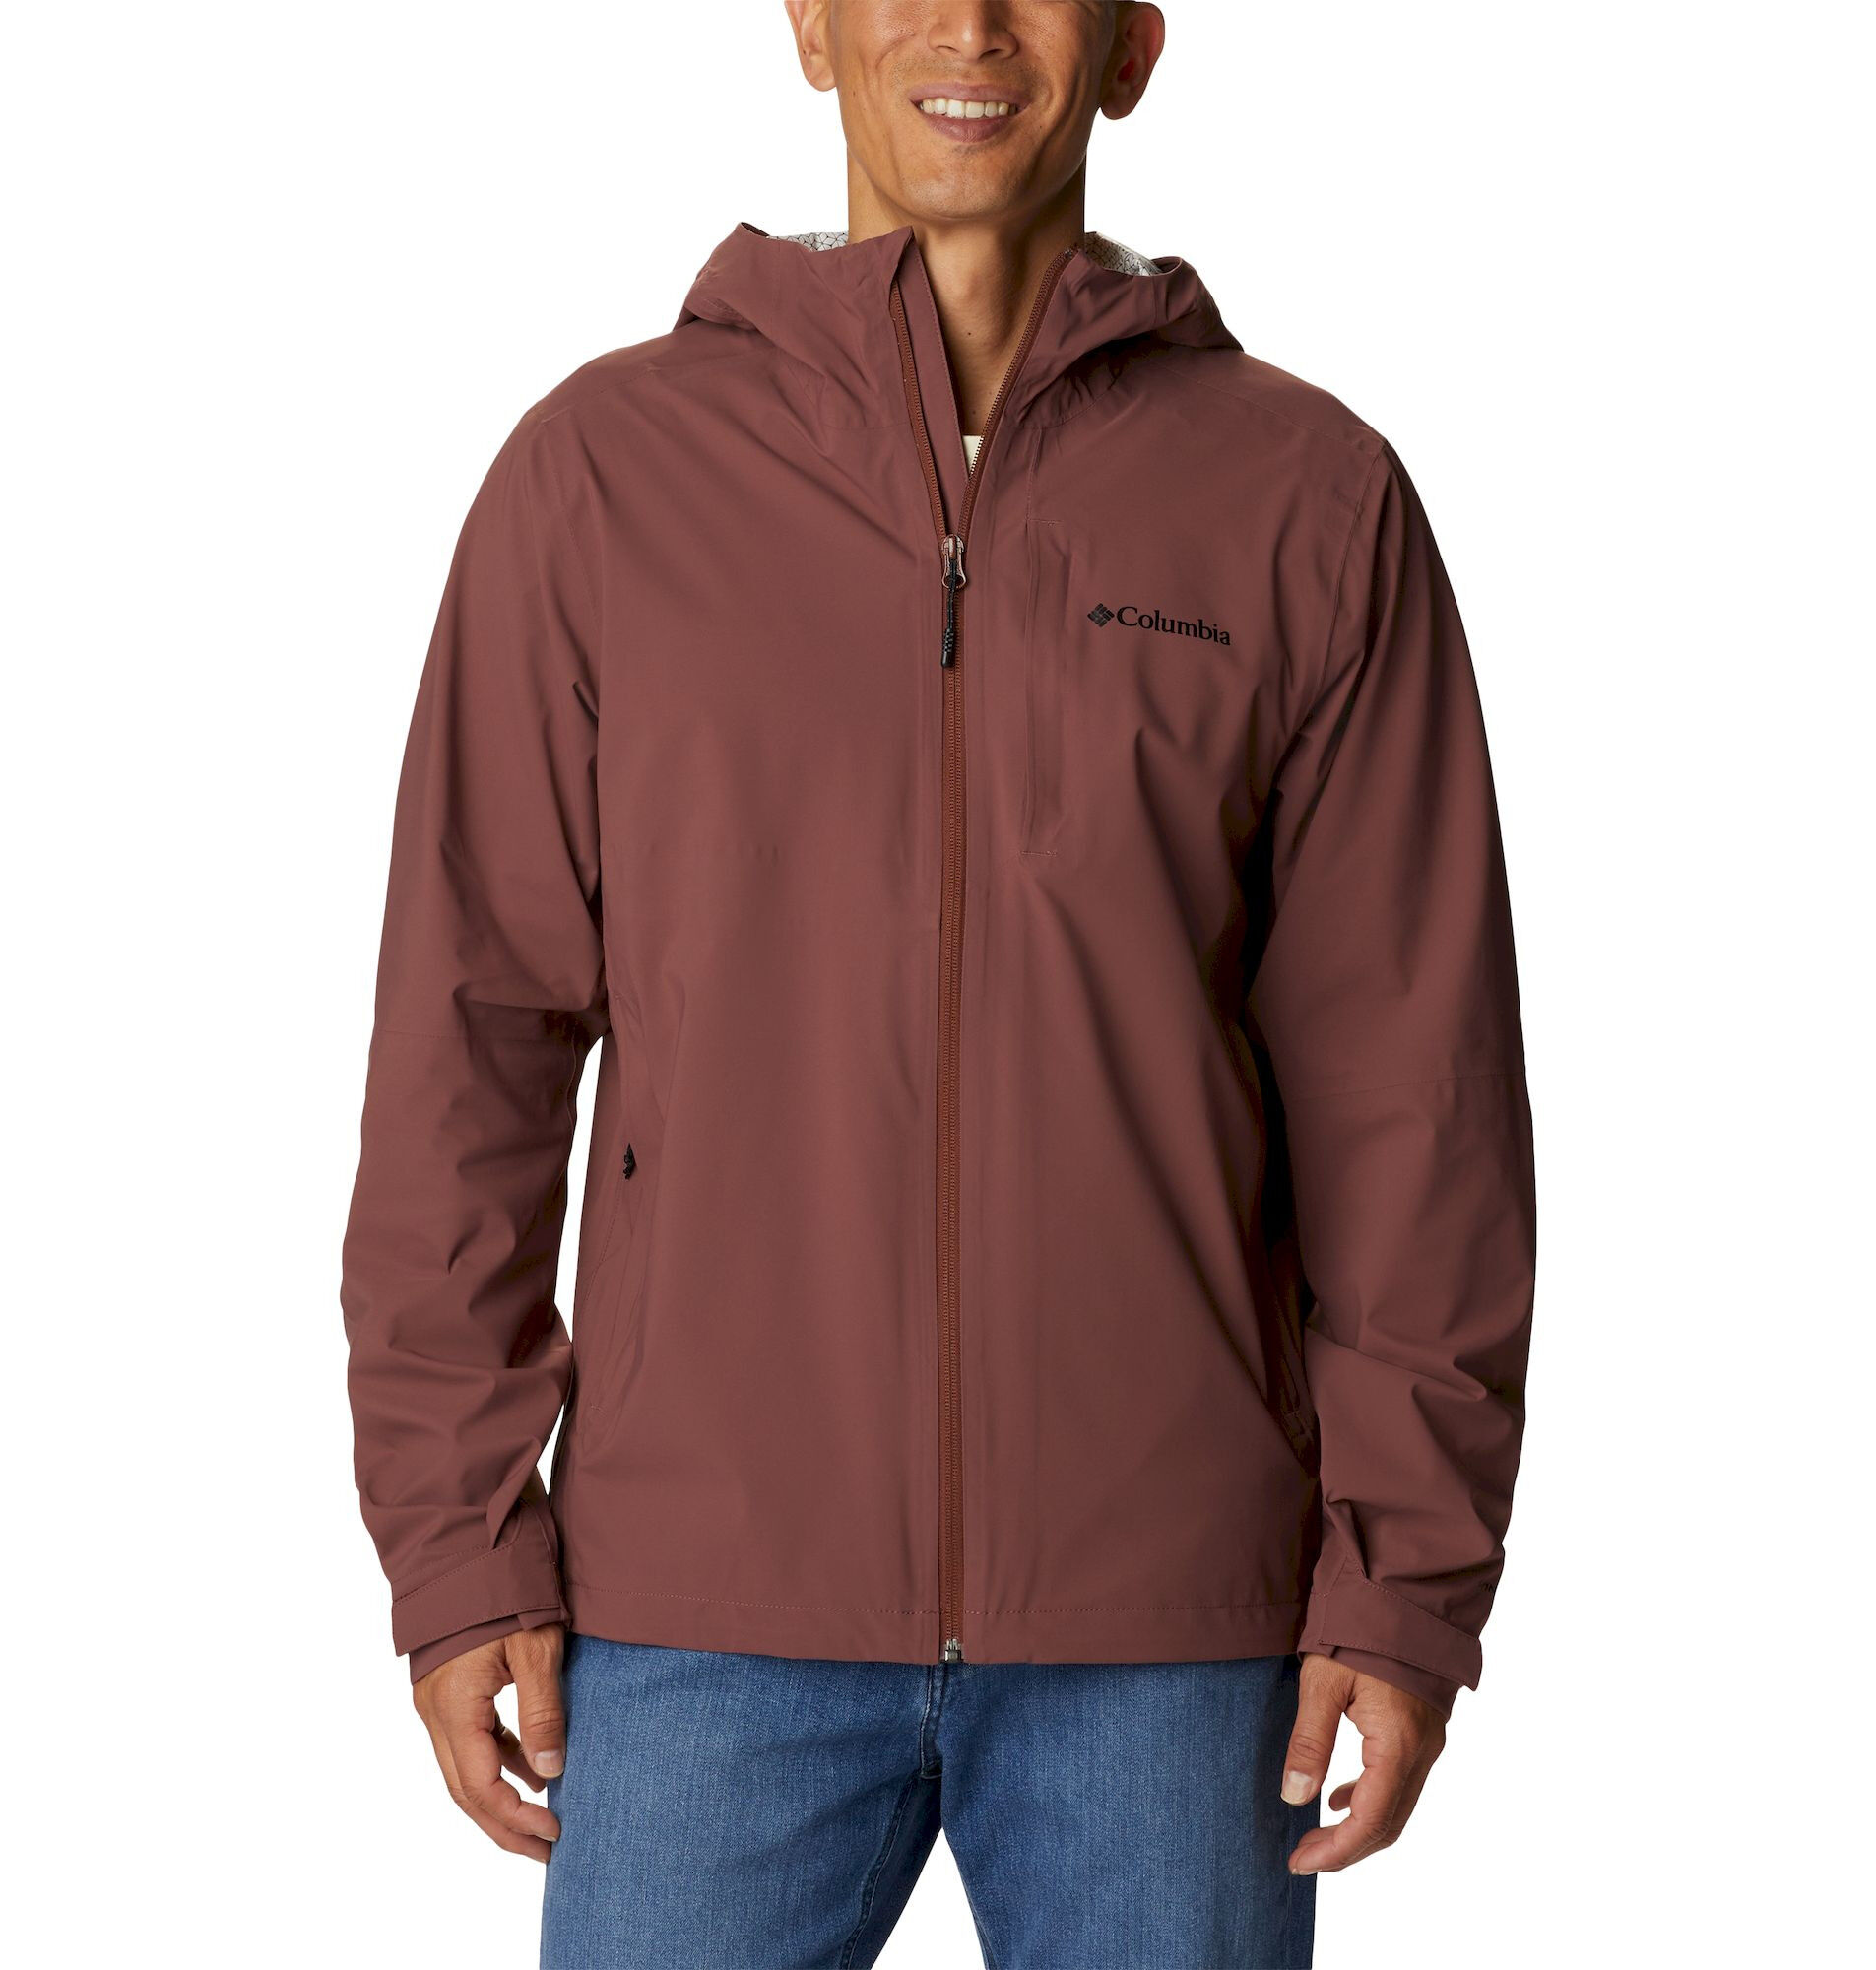 Columbia Omni-Tech Ampli-Dry Shell - Waterproof jacket - Men's